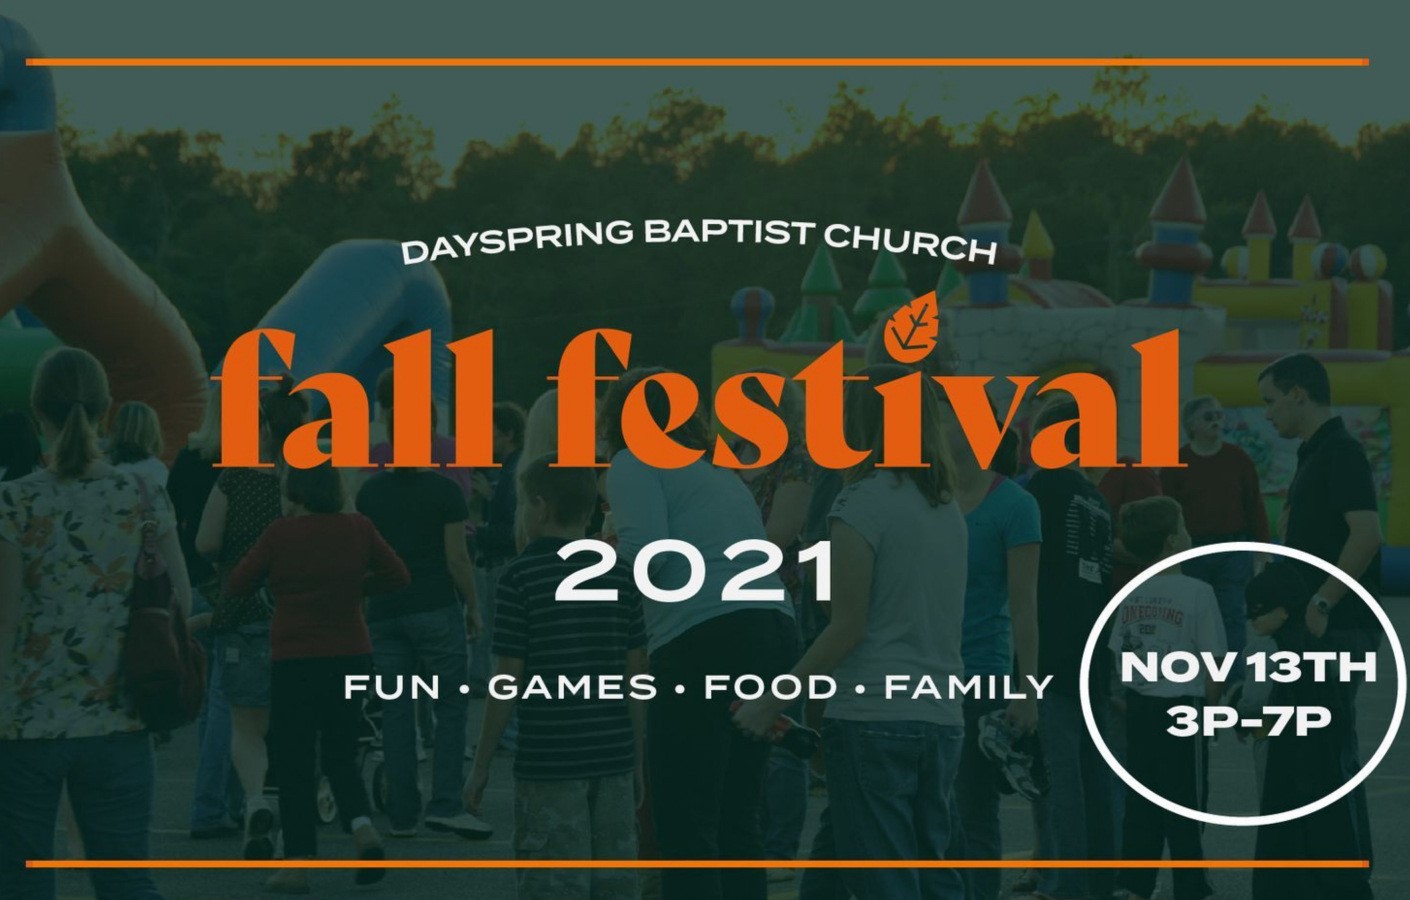 DAYSPRING BAPTIST CHURCH FALL FESTIVAL